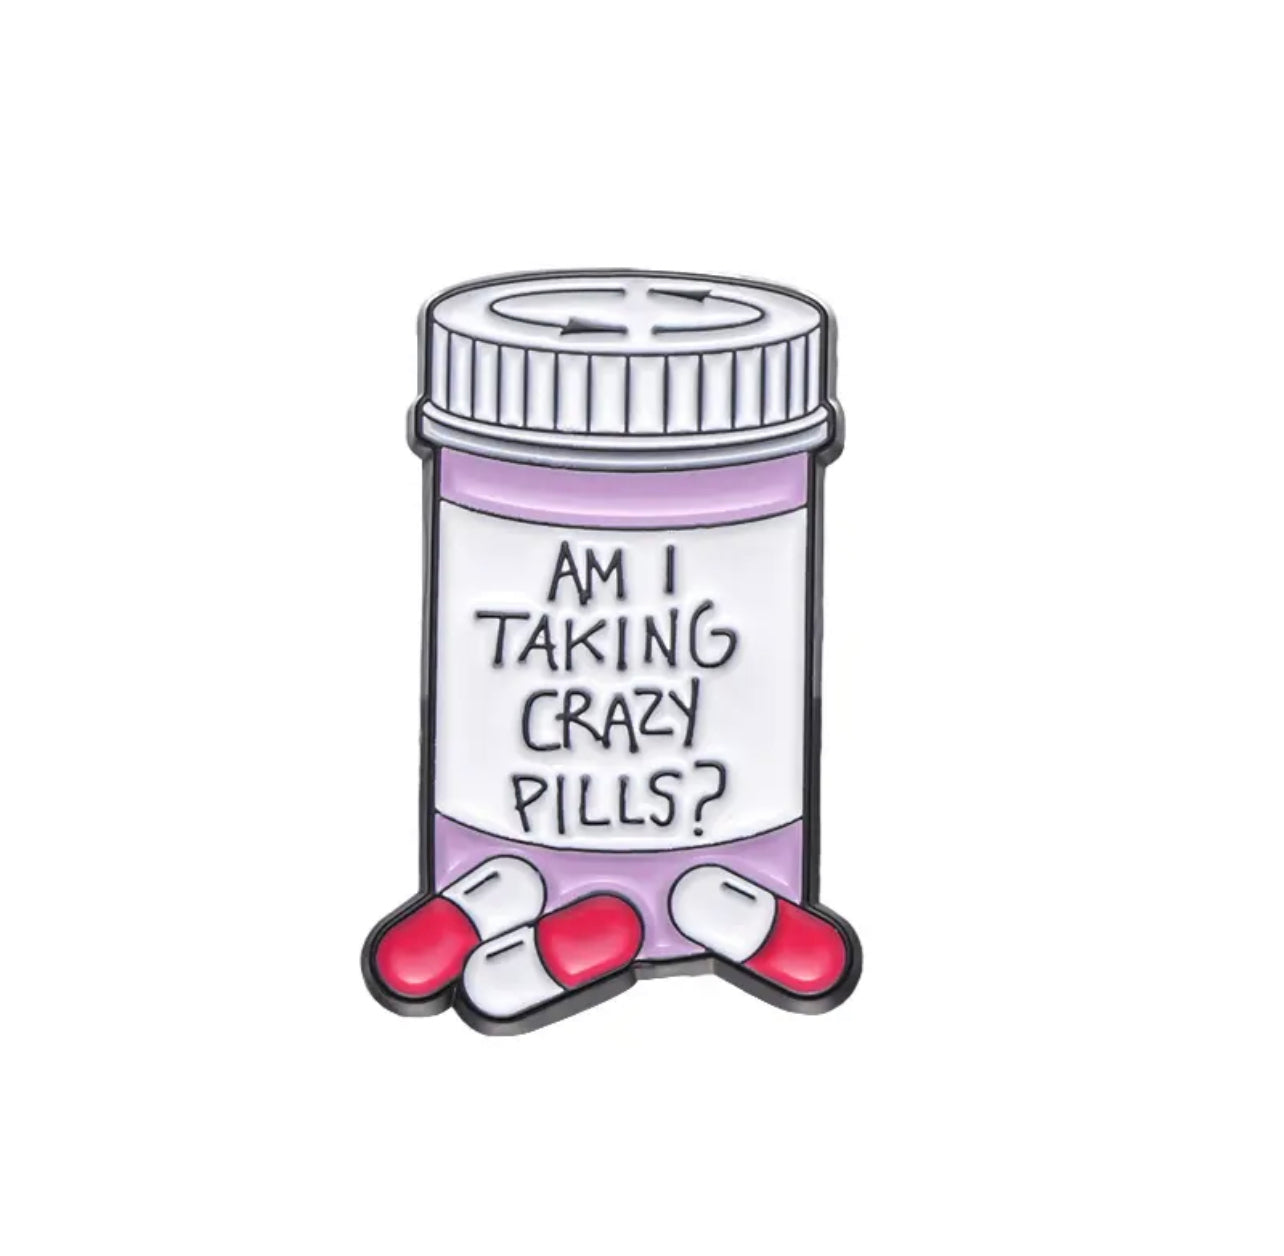 Crazy pills